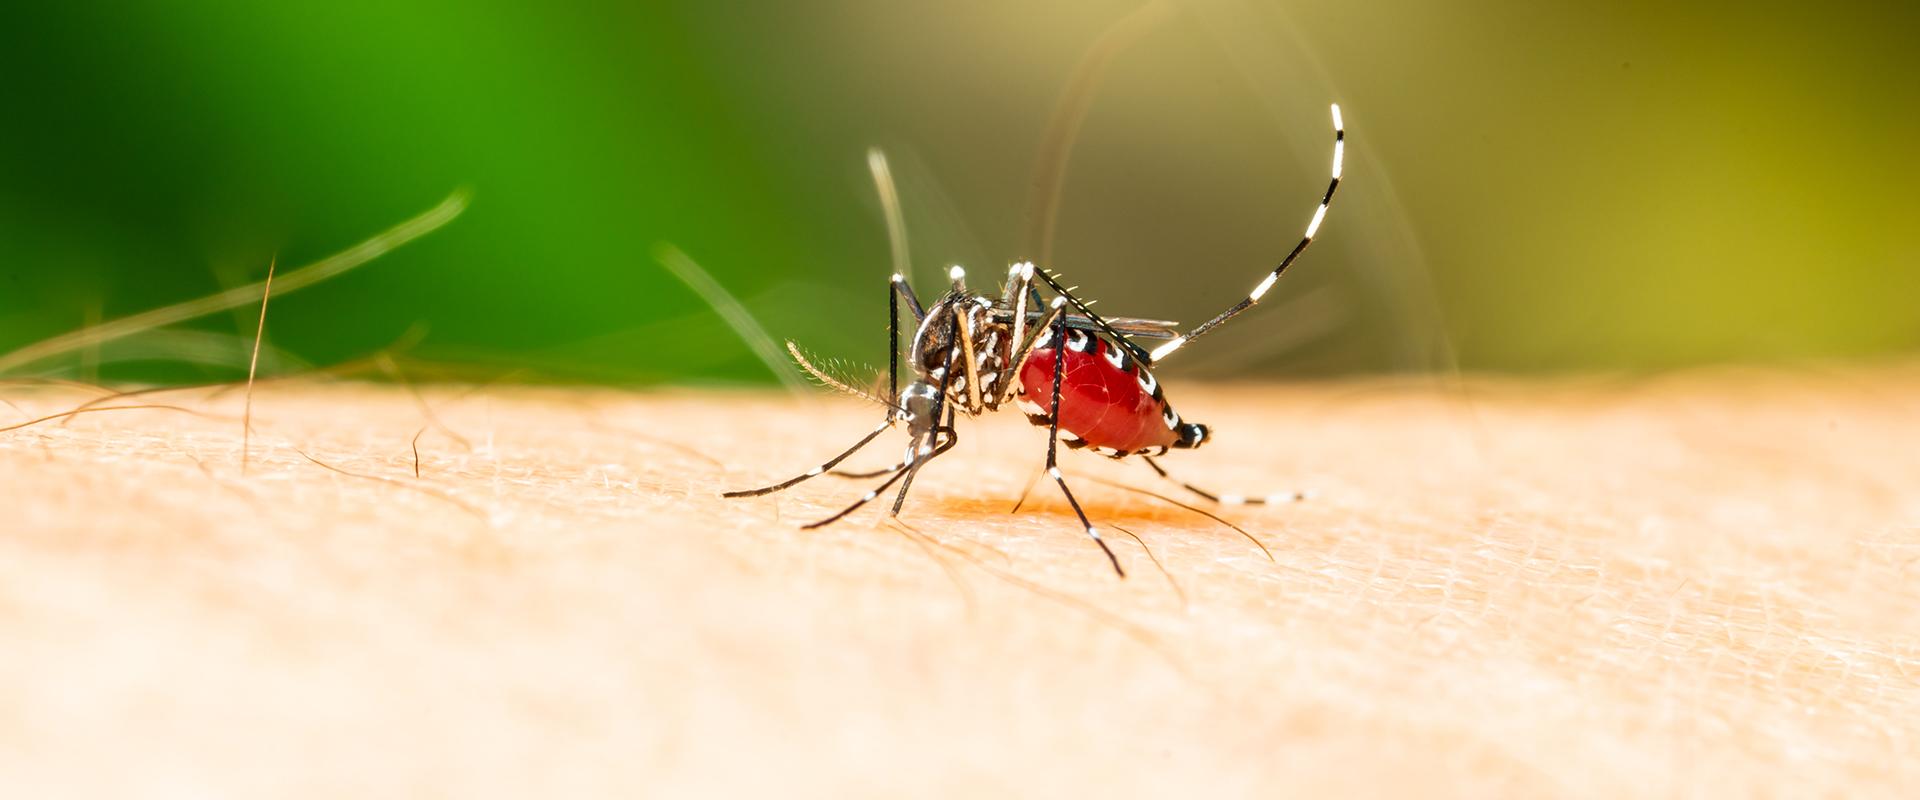 mosquito on human skin in meridian idaho